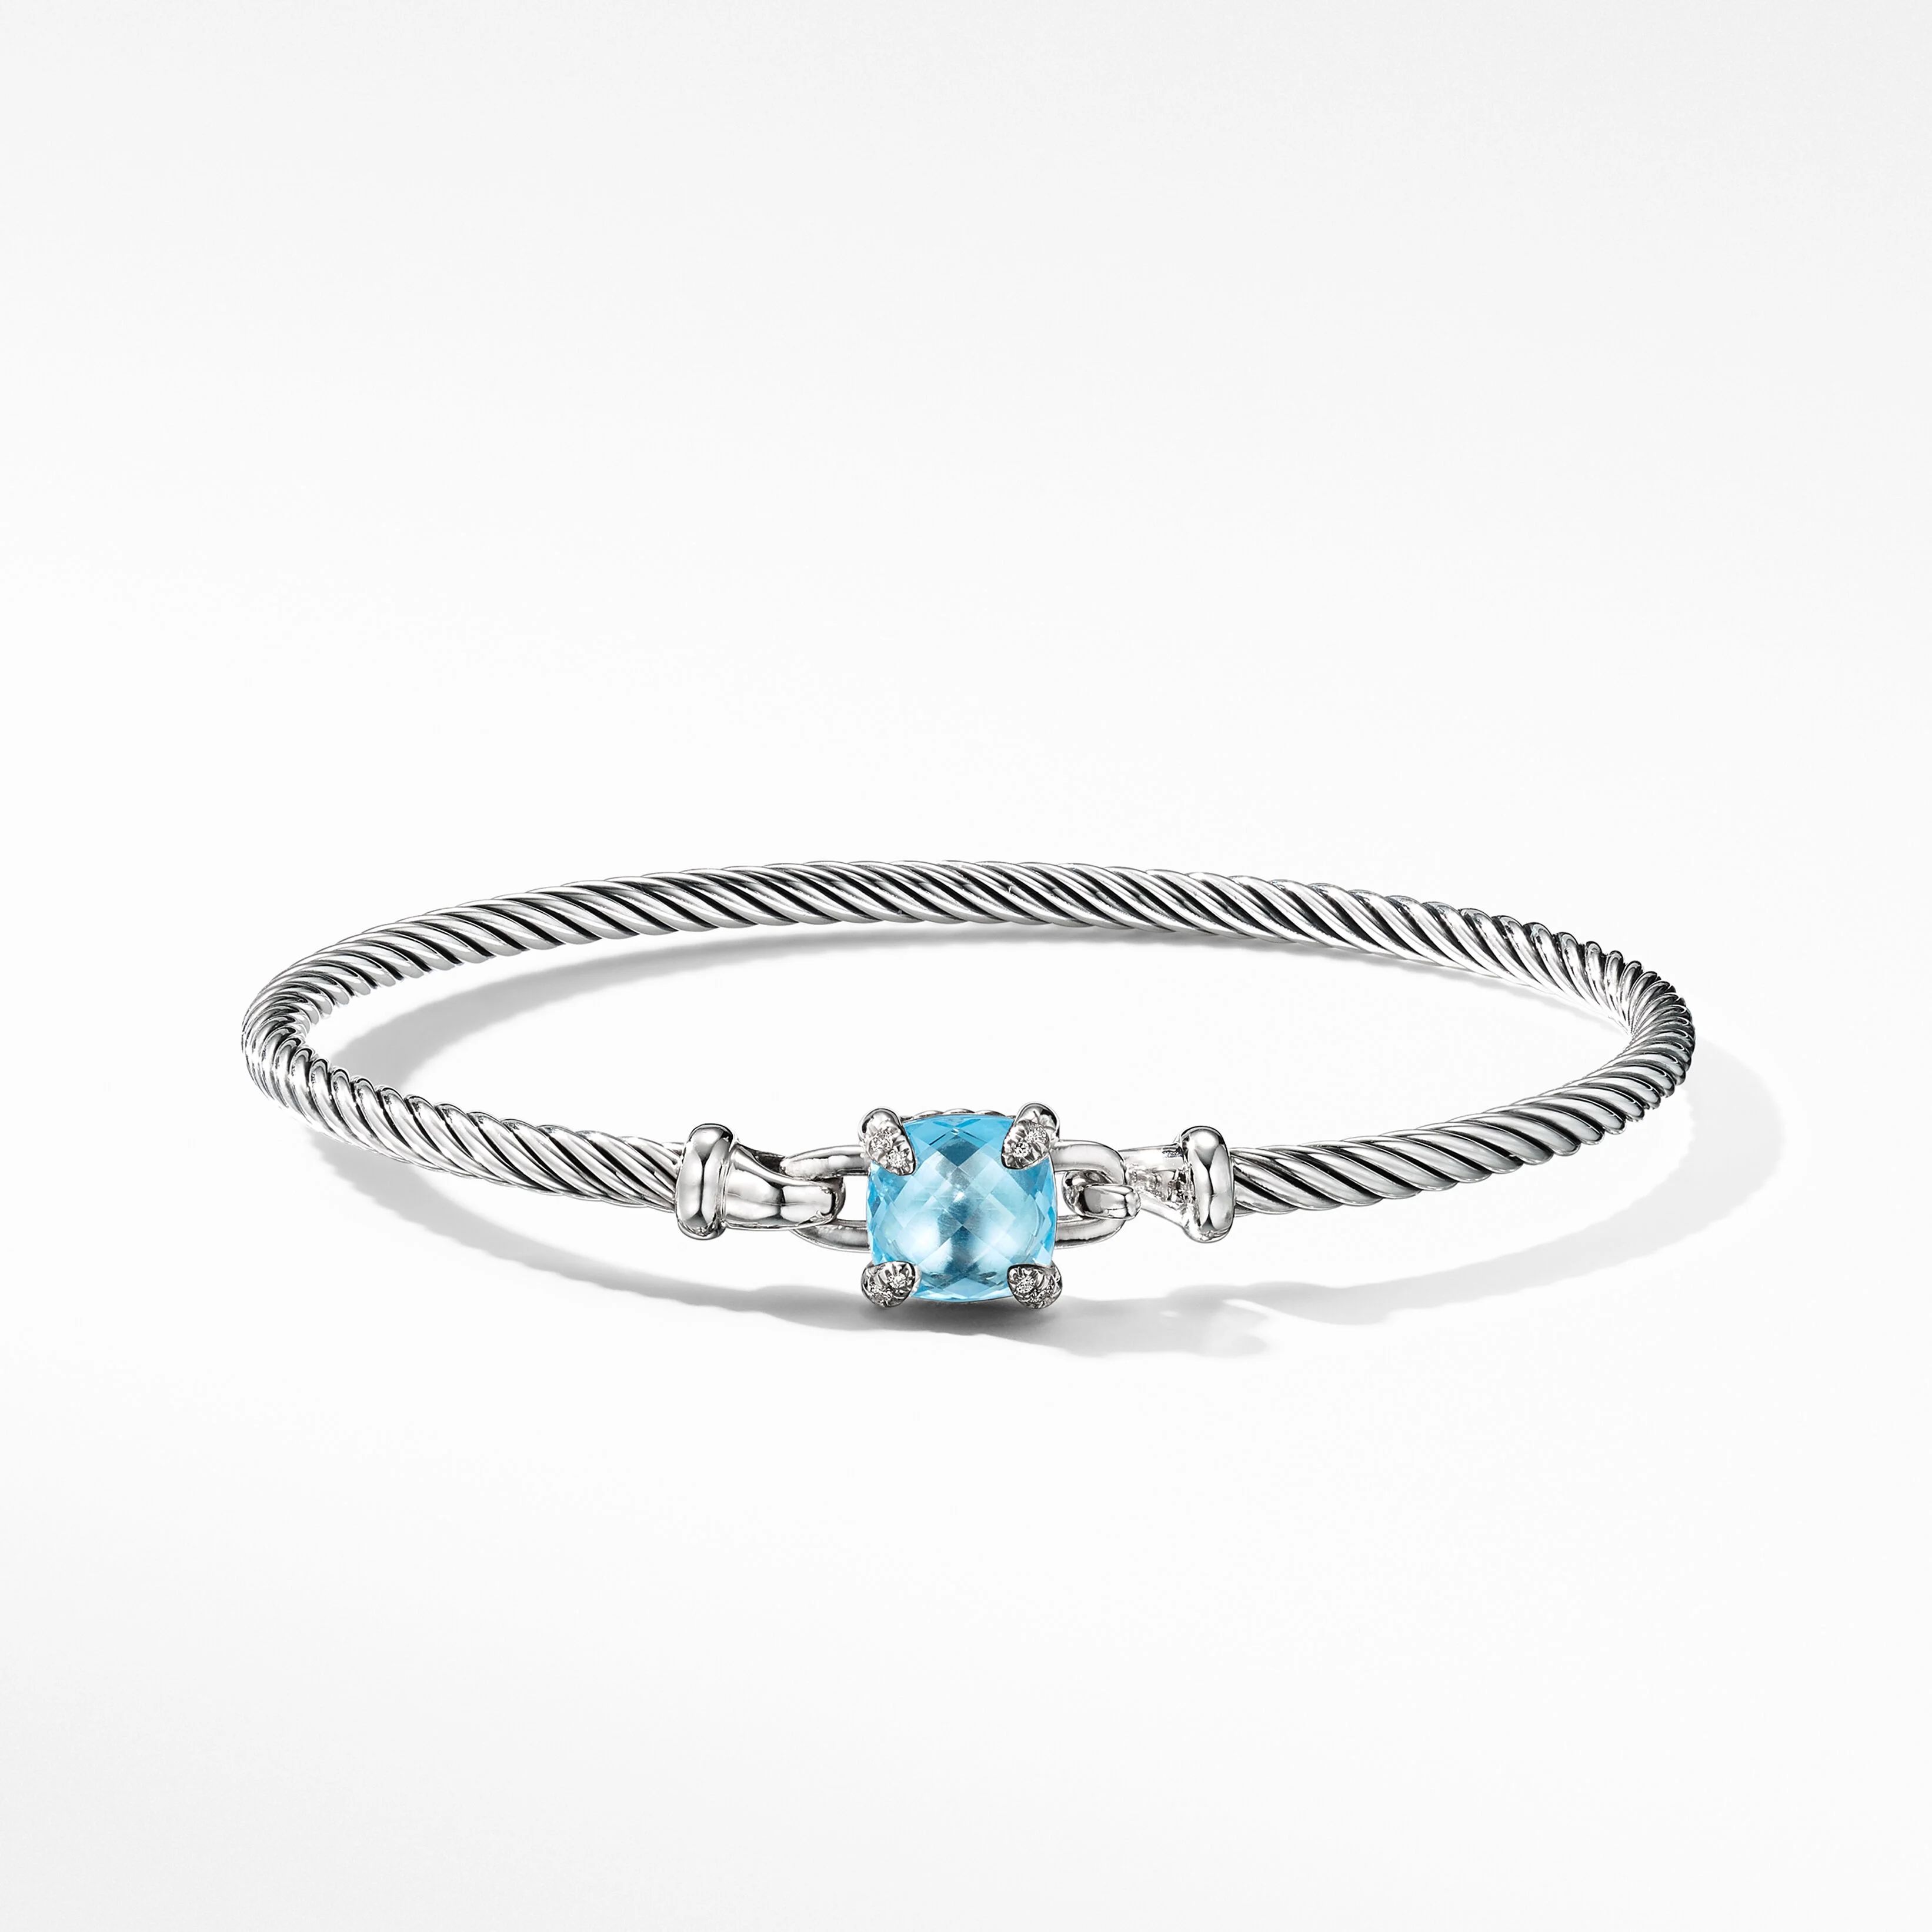 Chatelaine® Bracelet in Sterling Silver with Blue Topaz and Pavé Diamonds | David Yurman